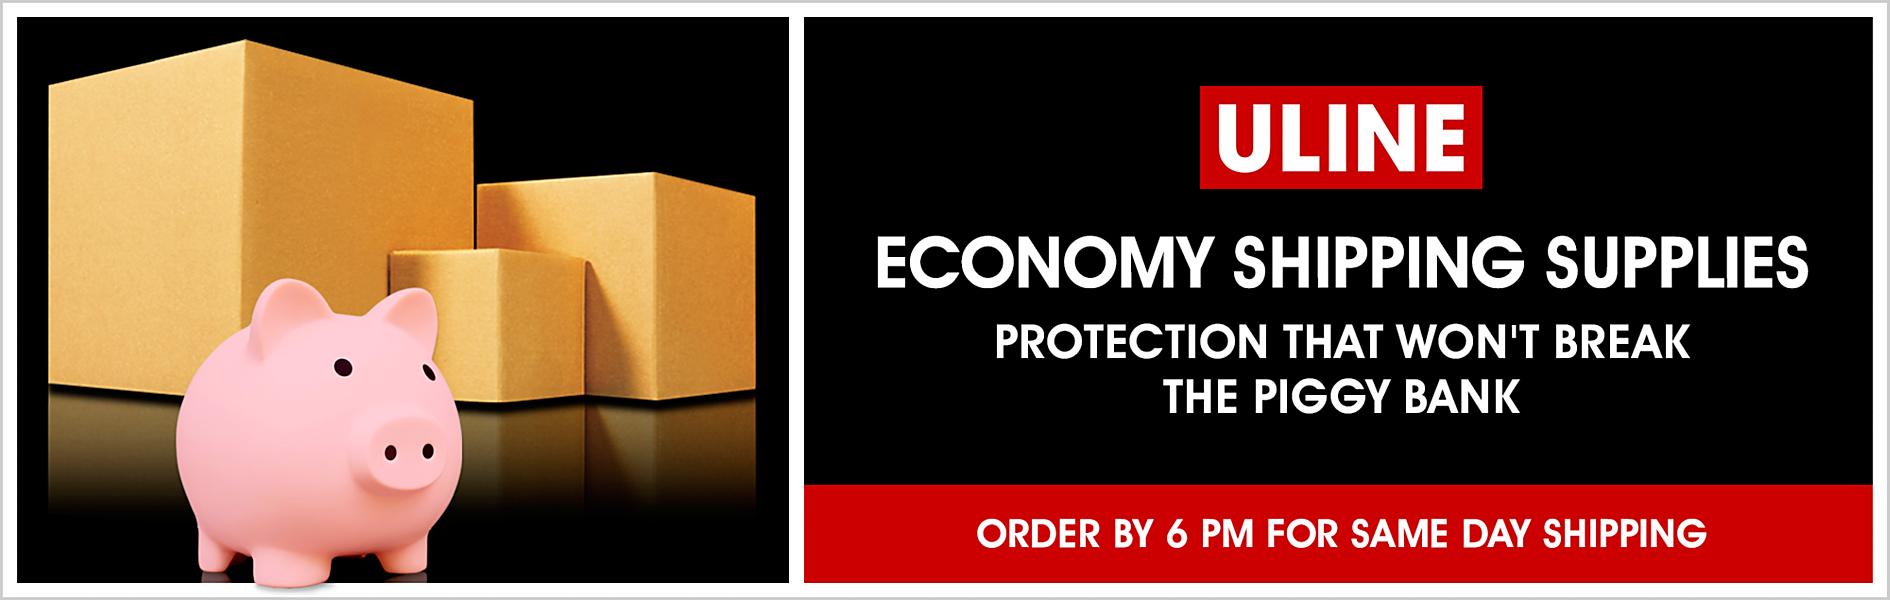 Uline: Economy Shipping Supplies